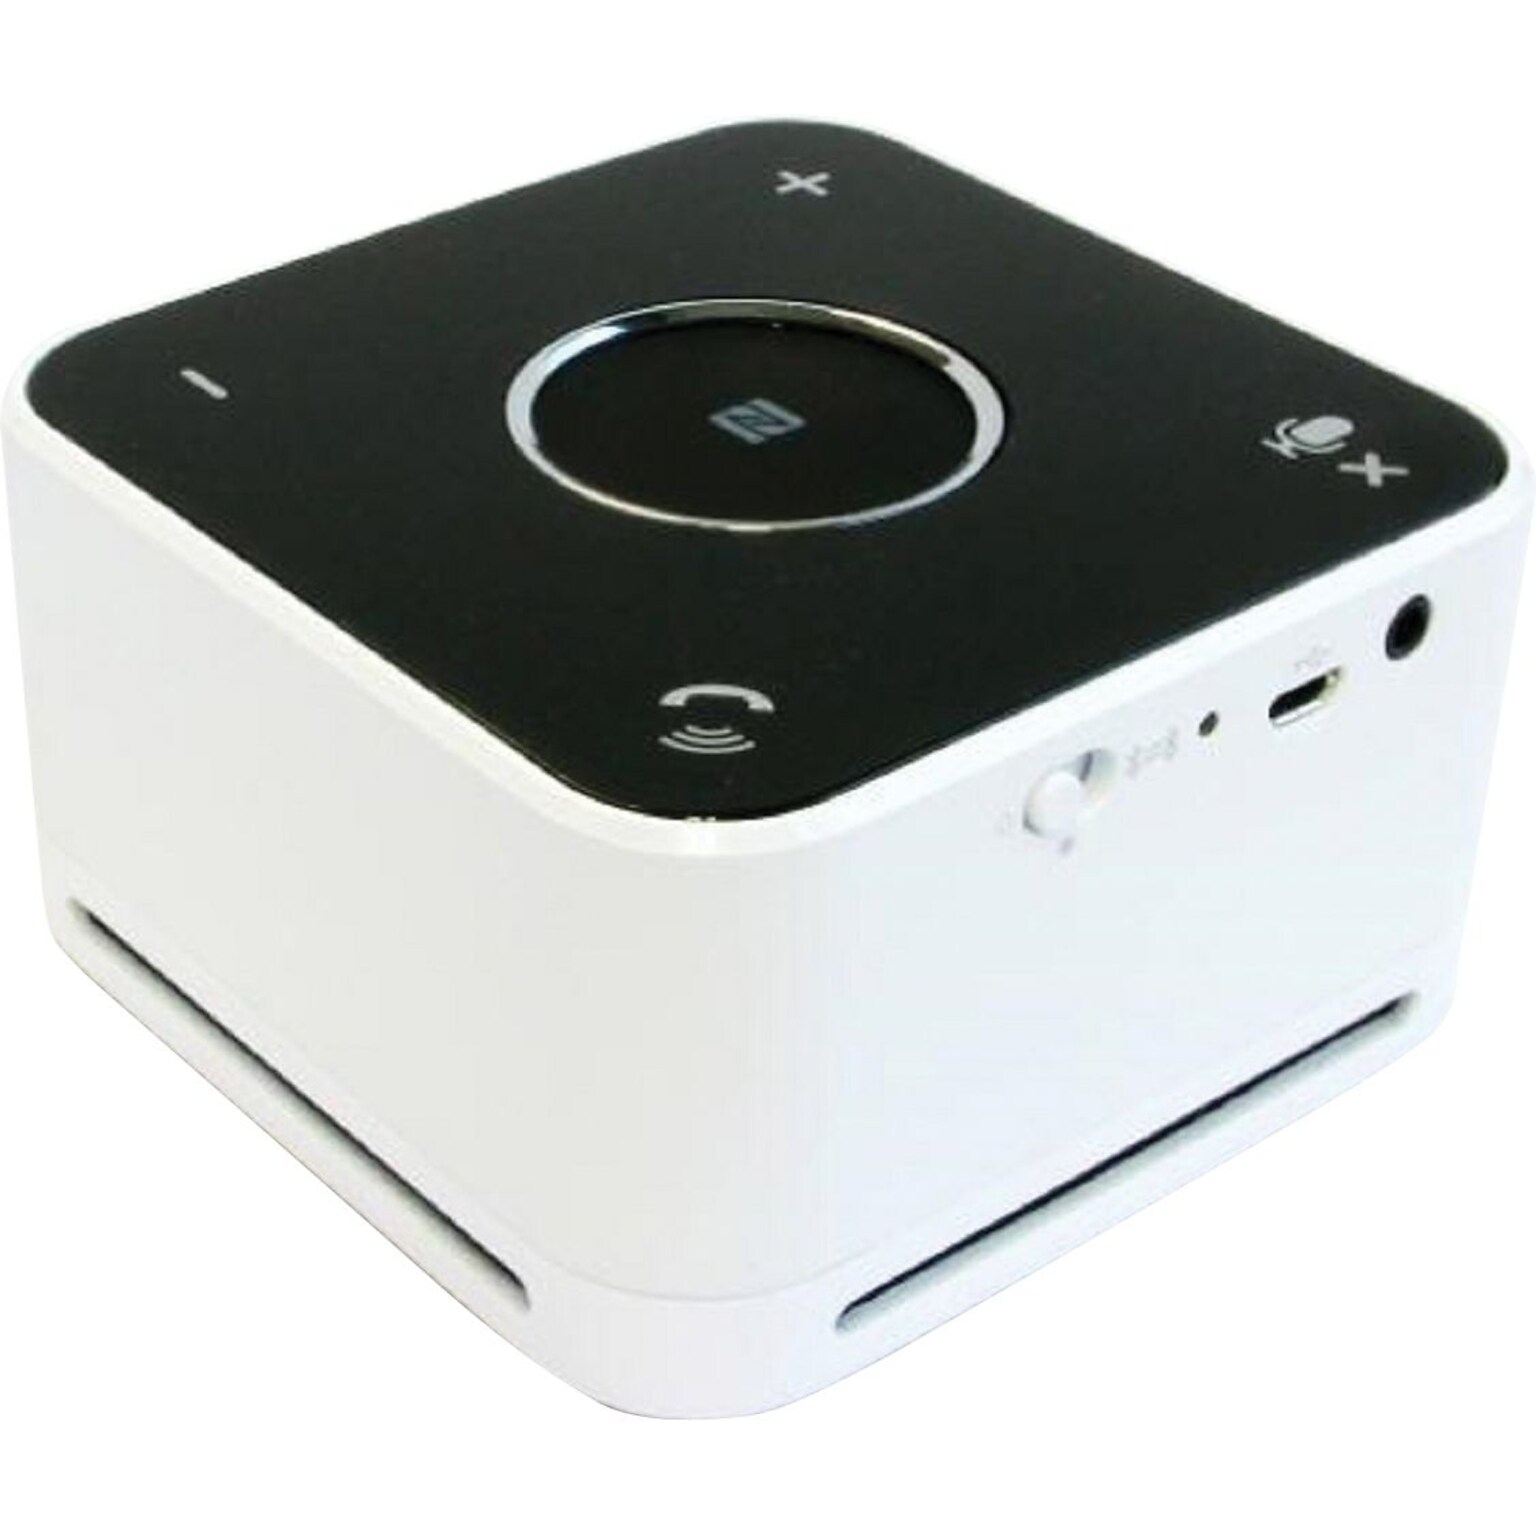 Spracht MCP-3022 Conference Mate Bluetooth Speakerphone w/Dual Mics; White